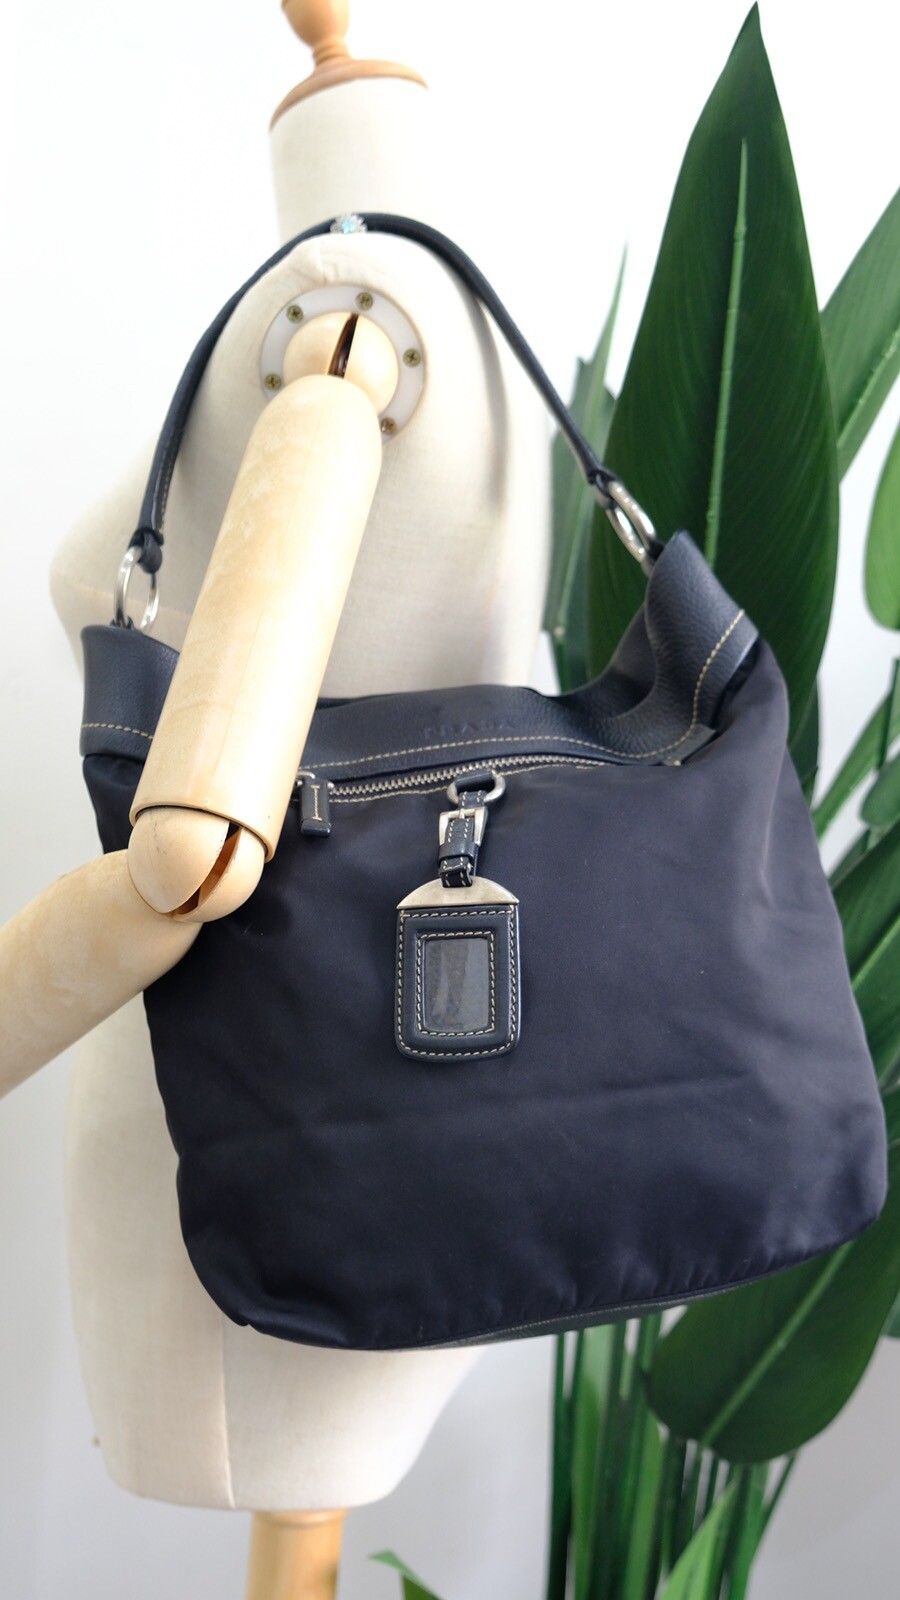 Authentic Prada black leather and nylon shoulder bag - 1